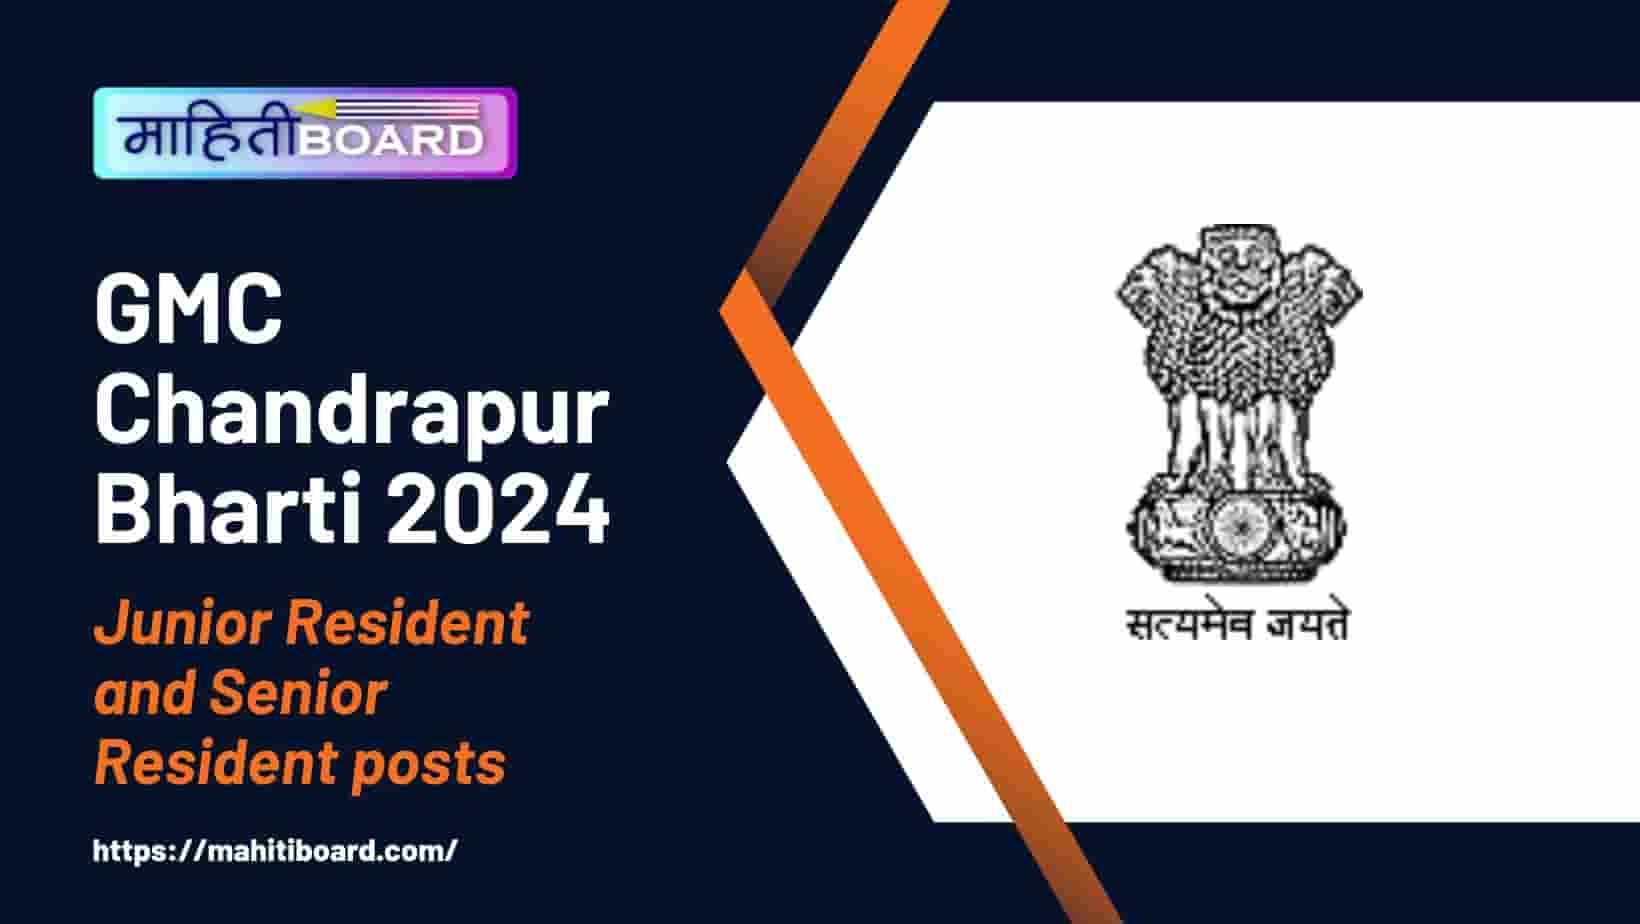 GMC Chandrapur Bharti 2024